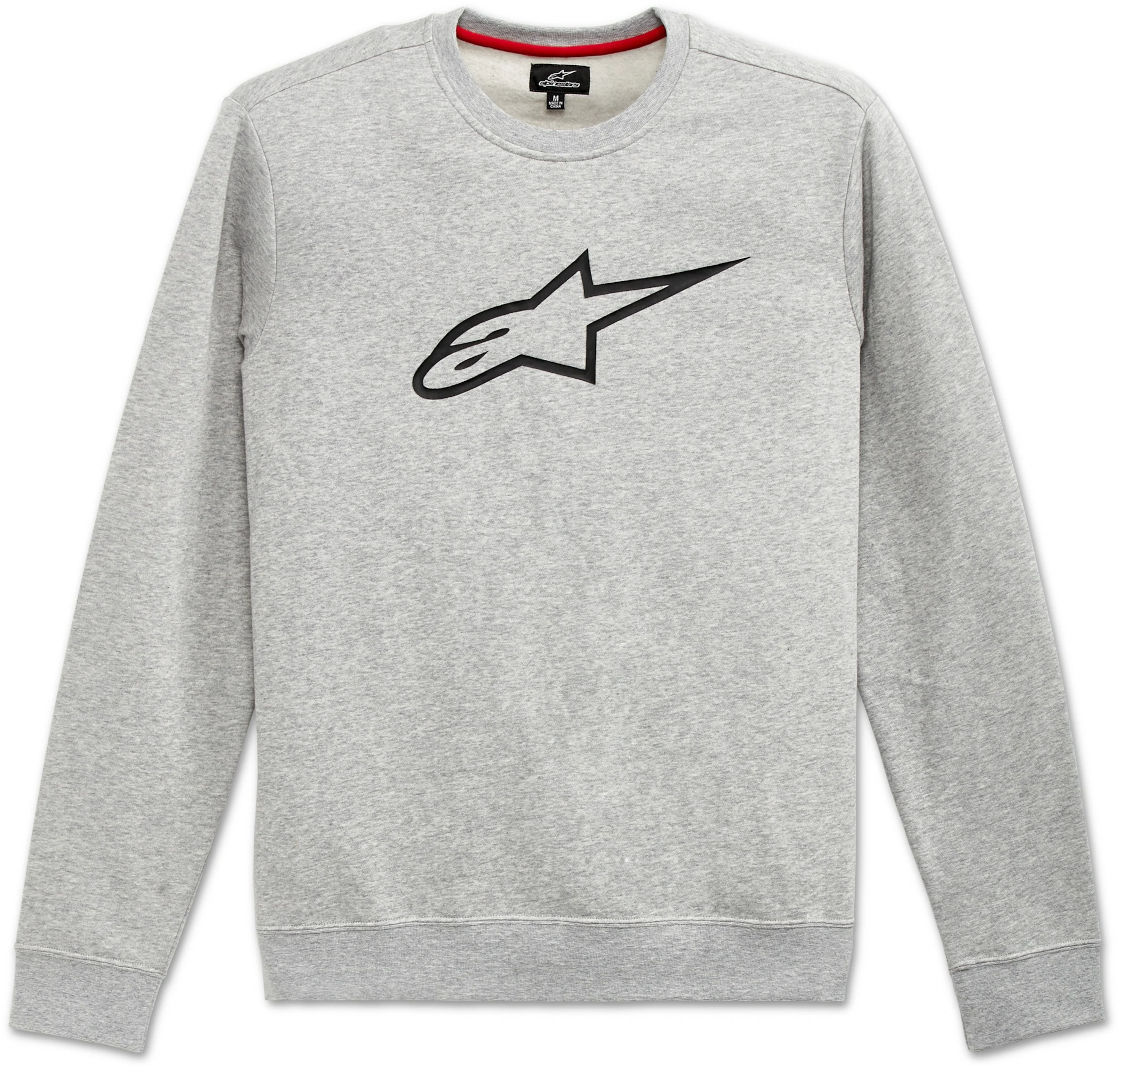 Пуловер Alpinestars Ageless Crew, серый пуловер размер m серый